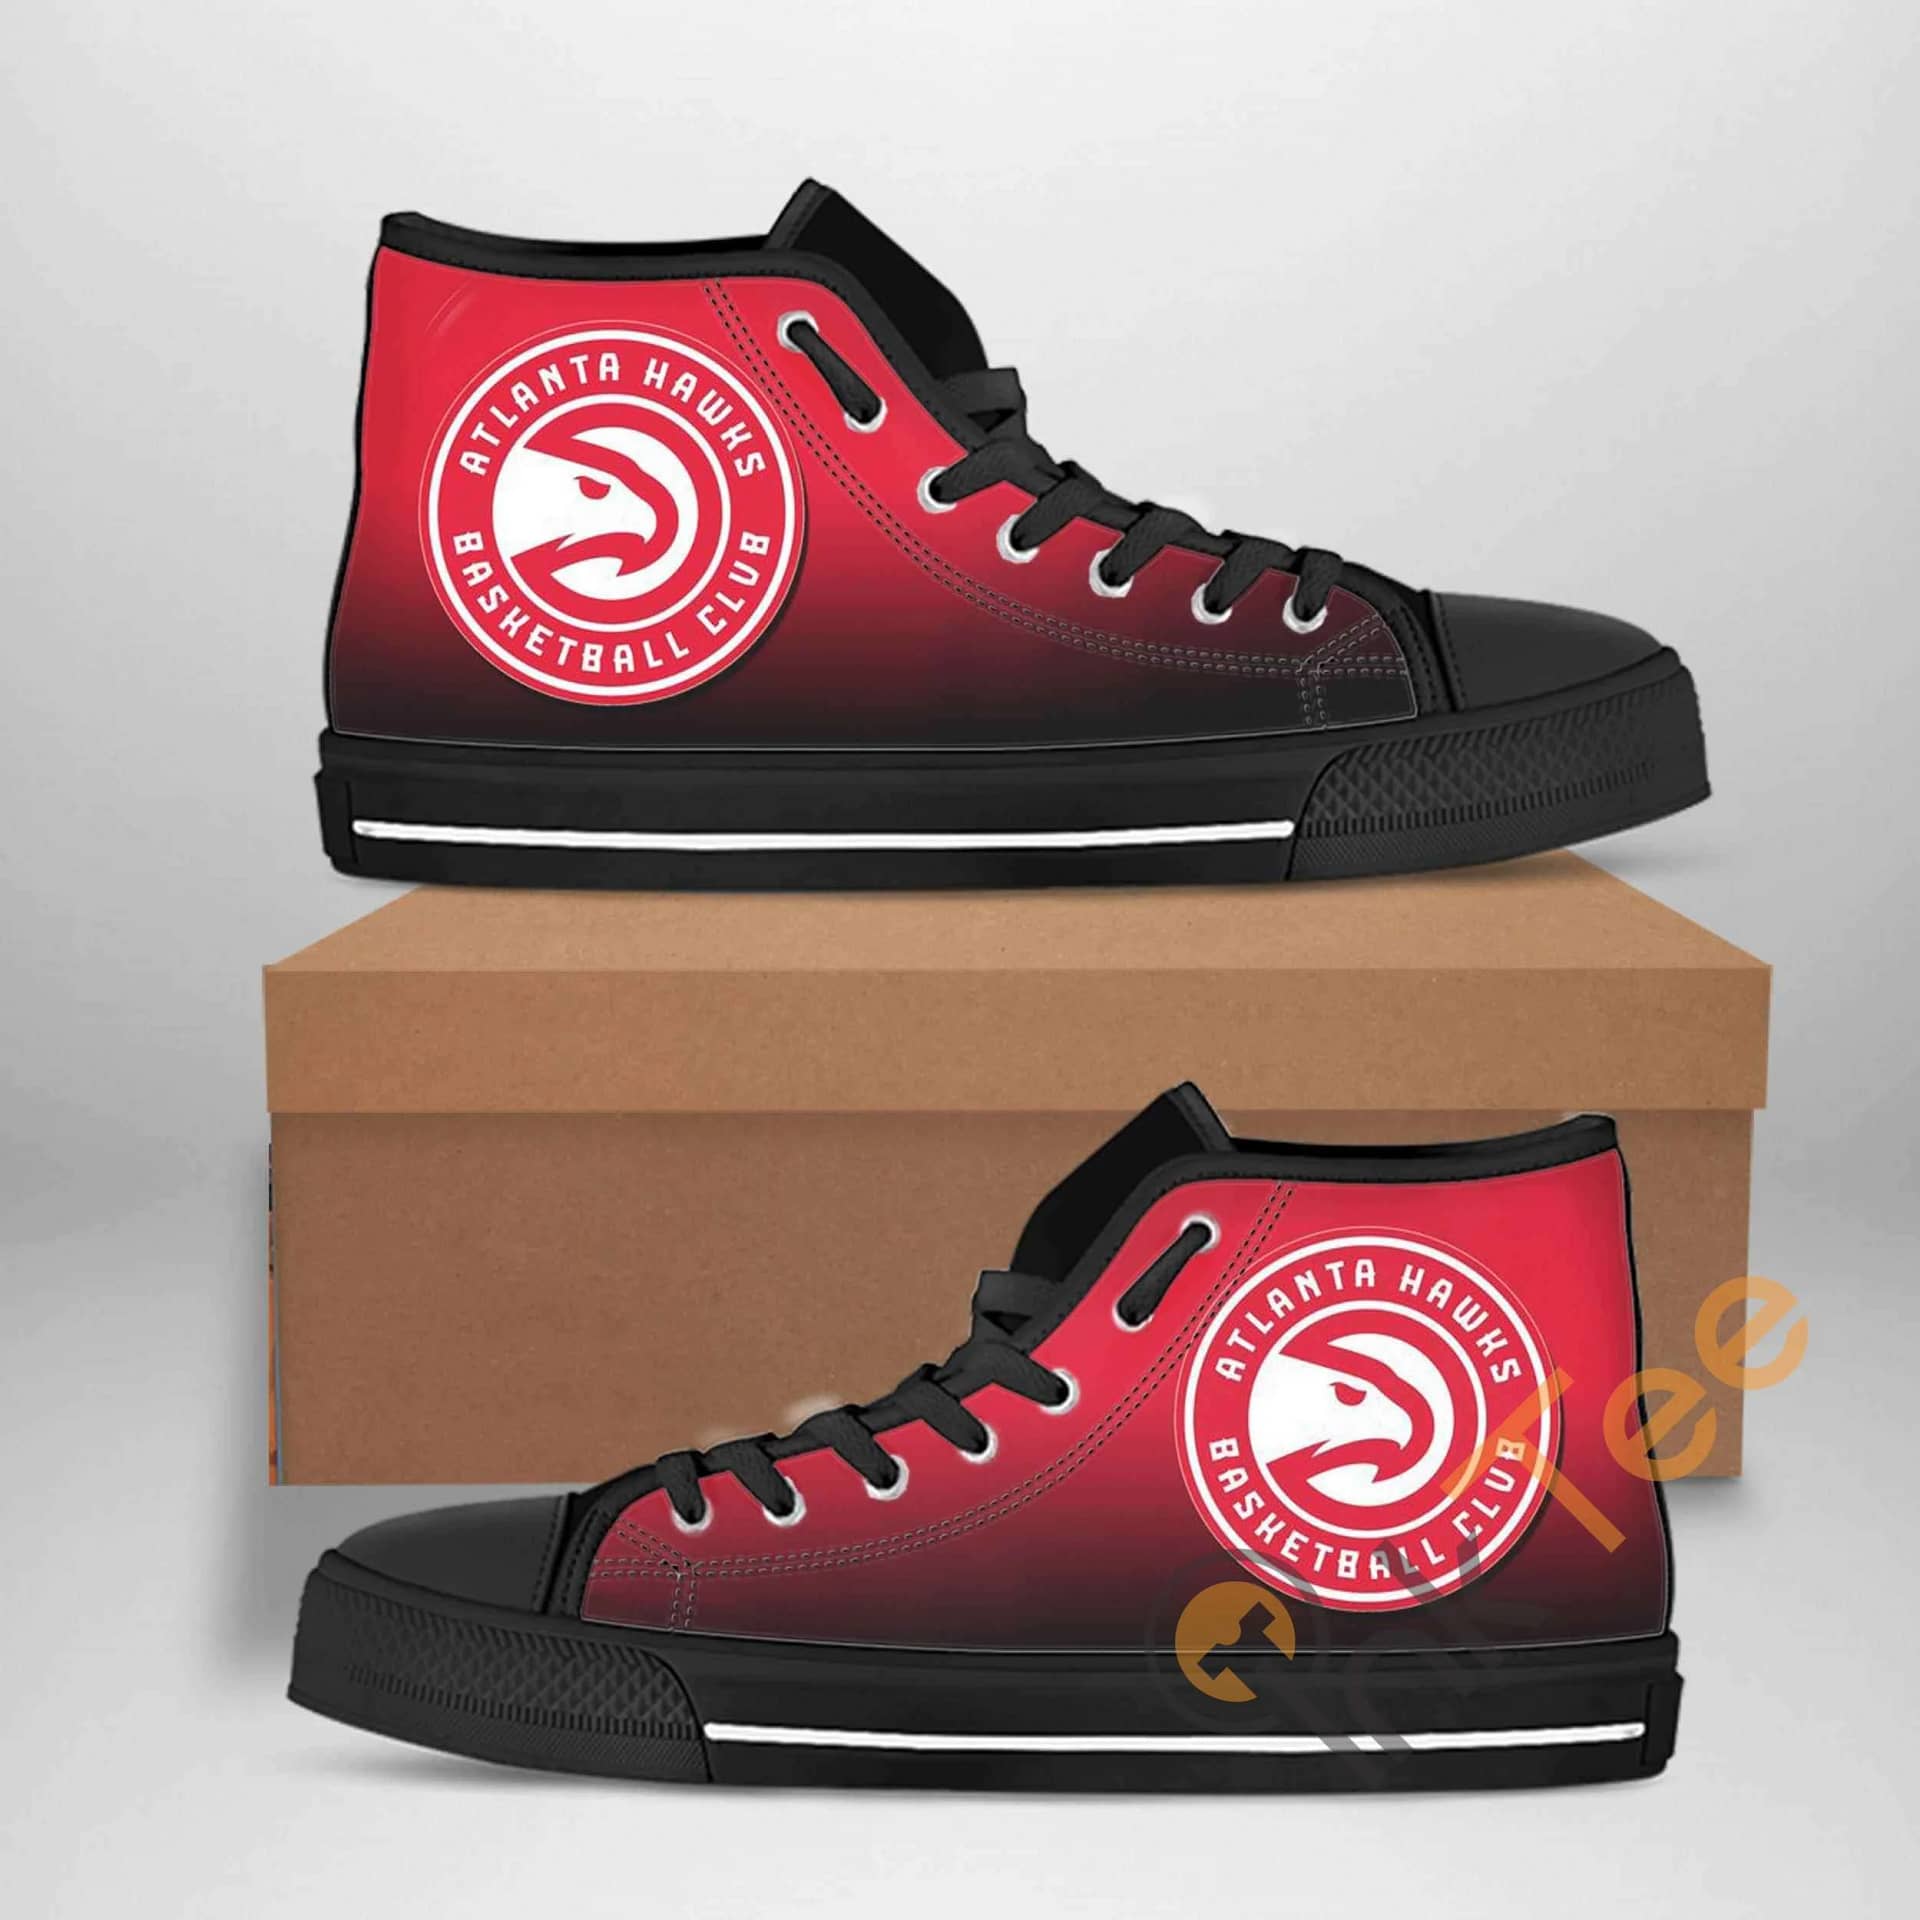 Atlanta Hawks Nba Basketball Amazon Best Seller Sku 1264 High Top Shoes